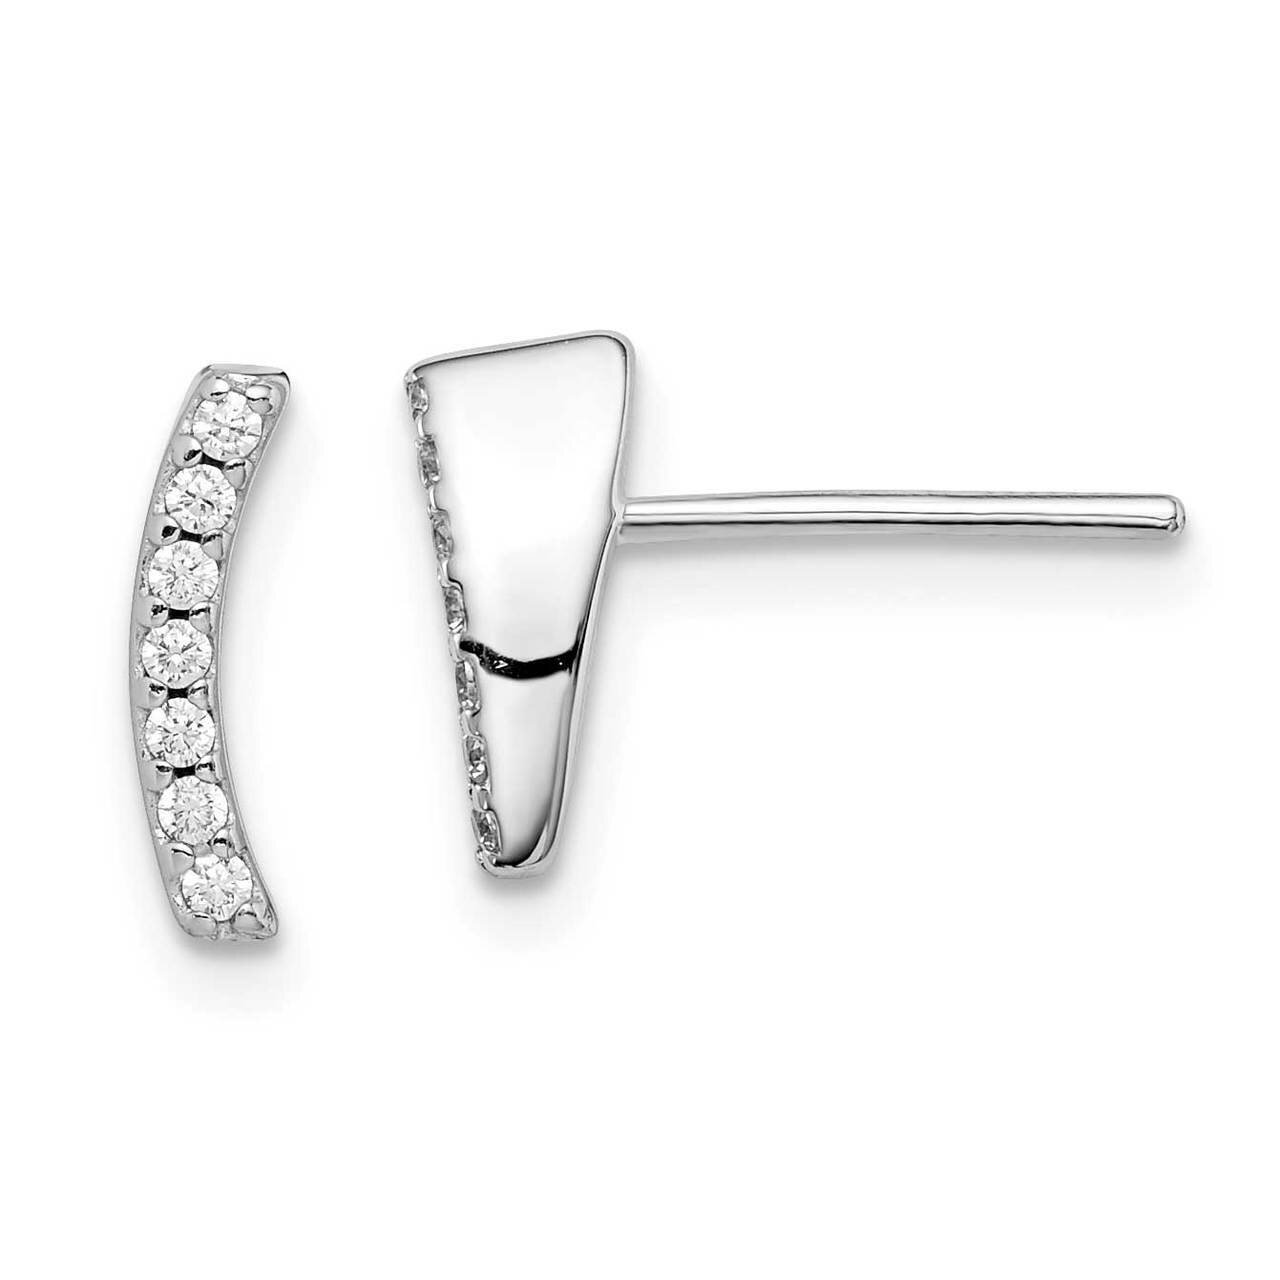 Earrings Sterling Silver Rhodium Plated CZ Diamond QE14658